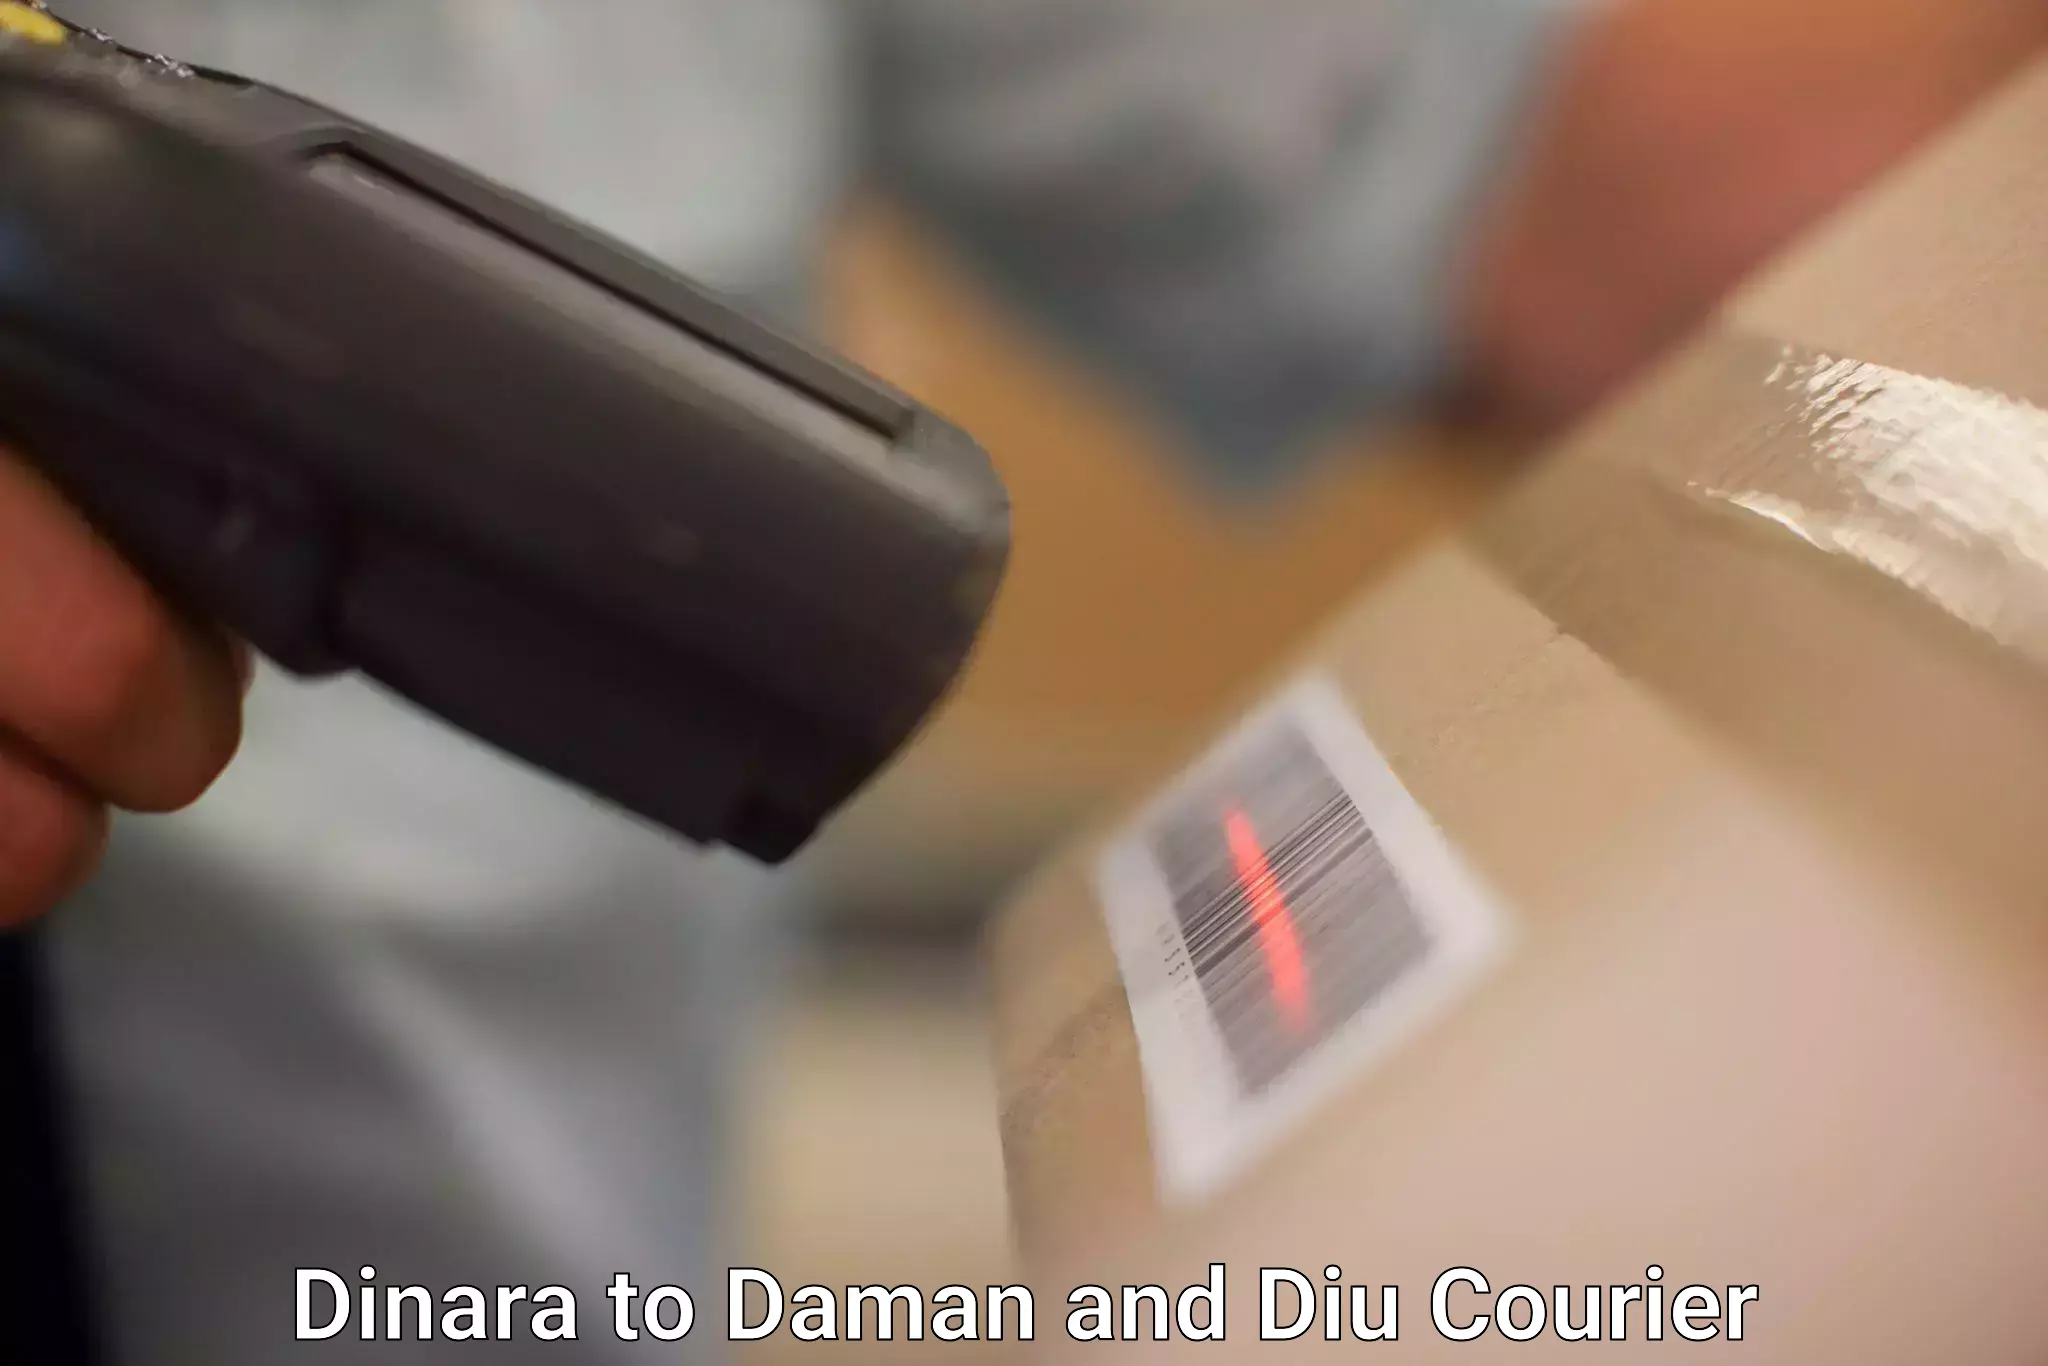 Courier service comparison Dinara to Diu